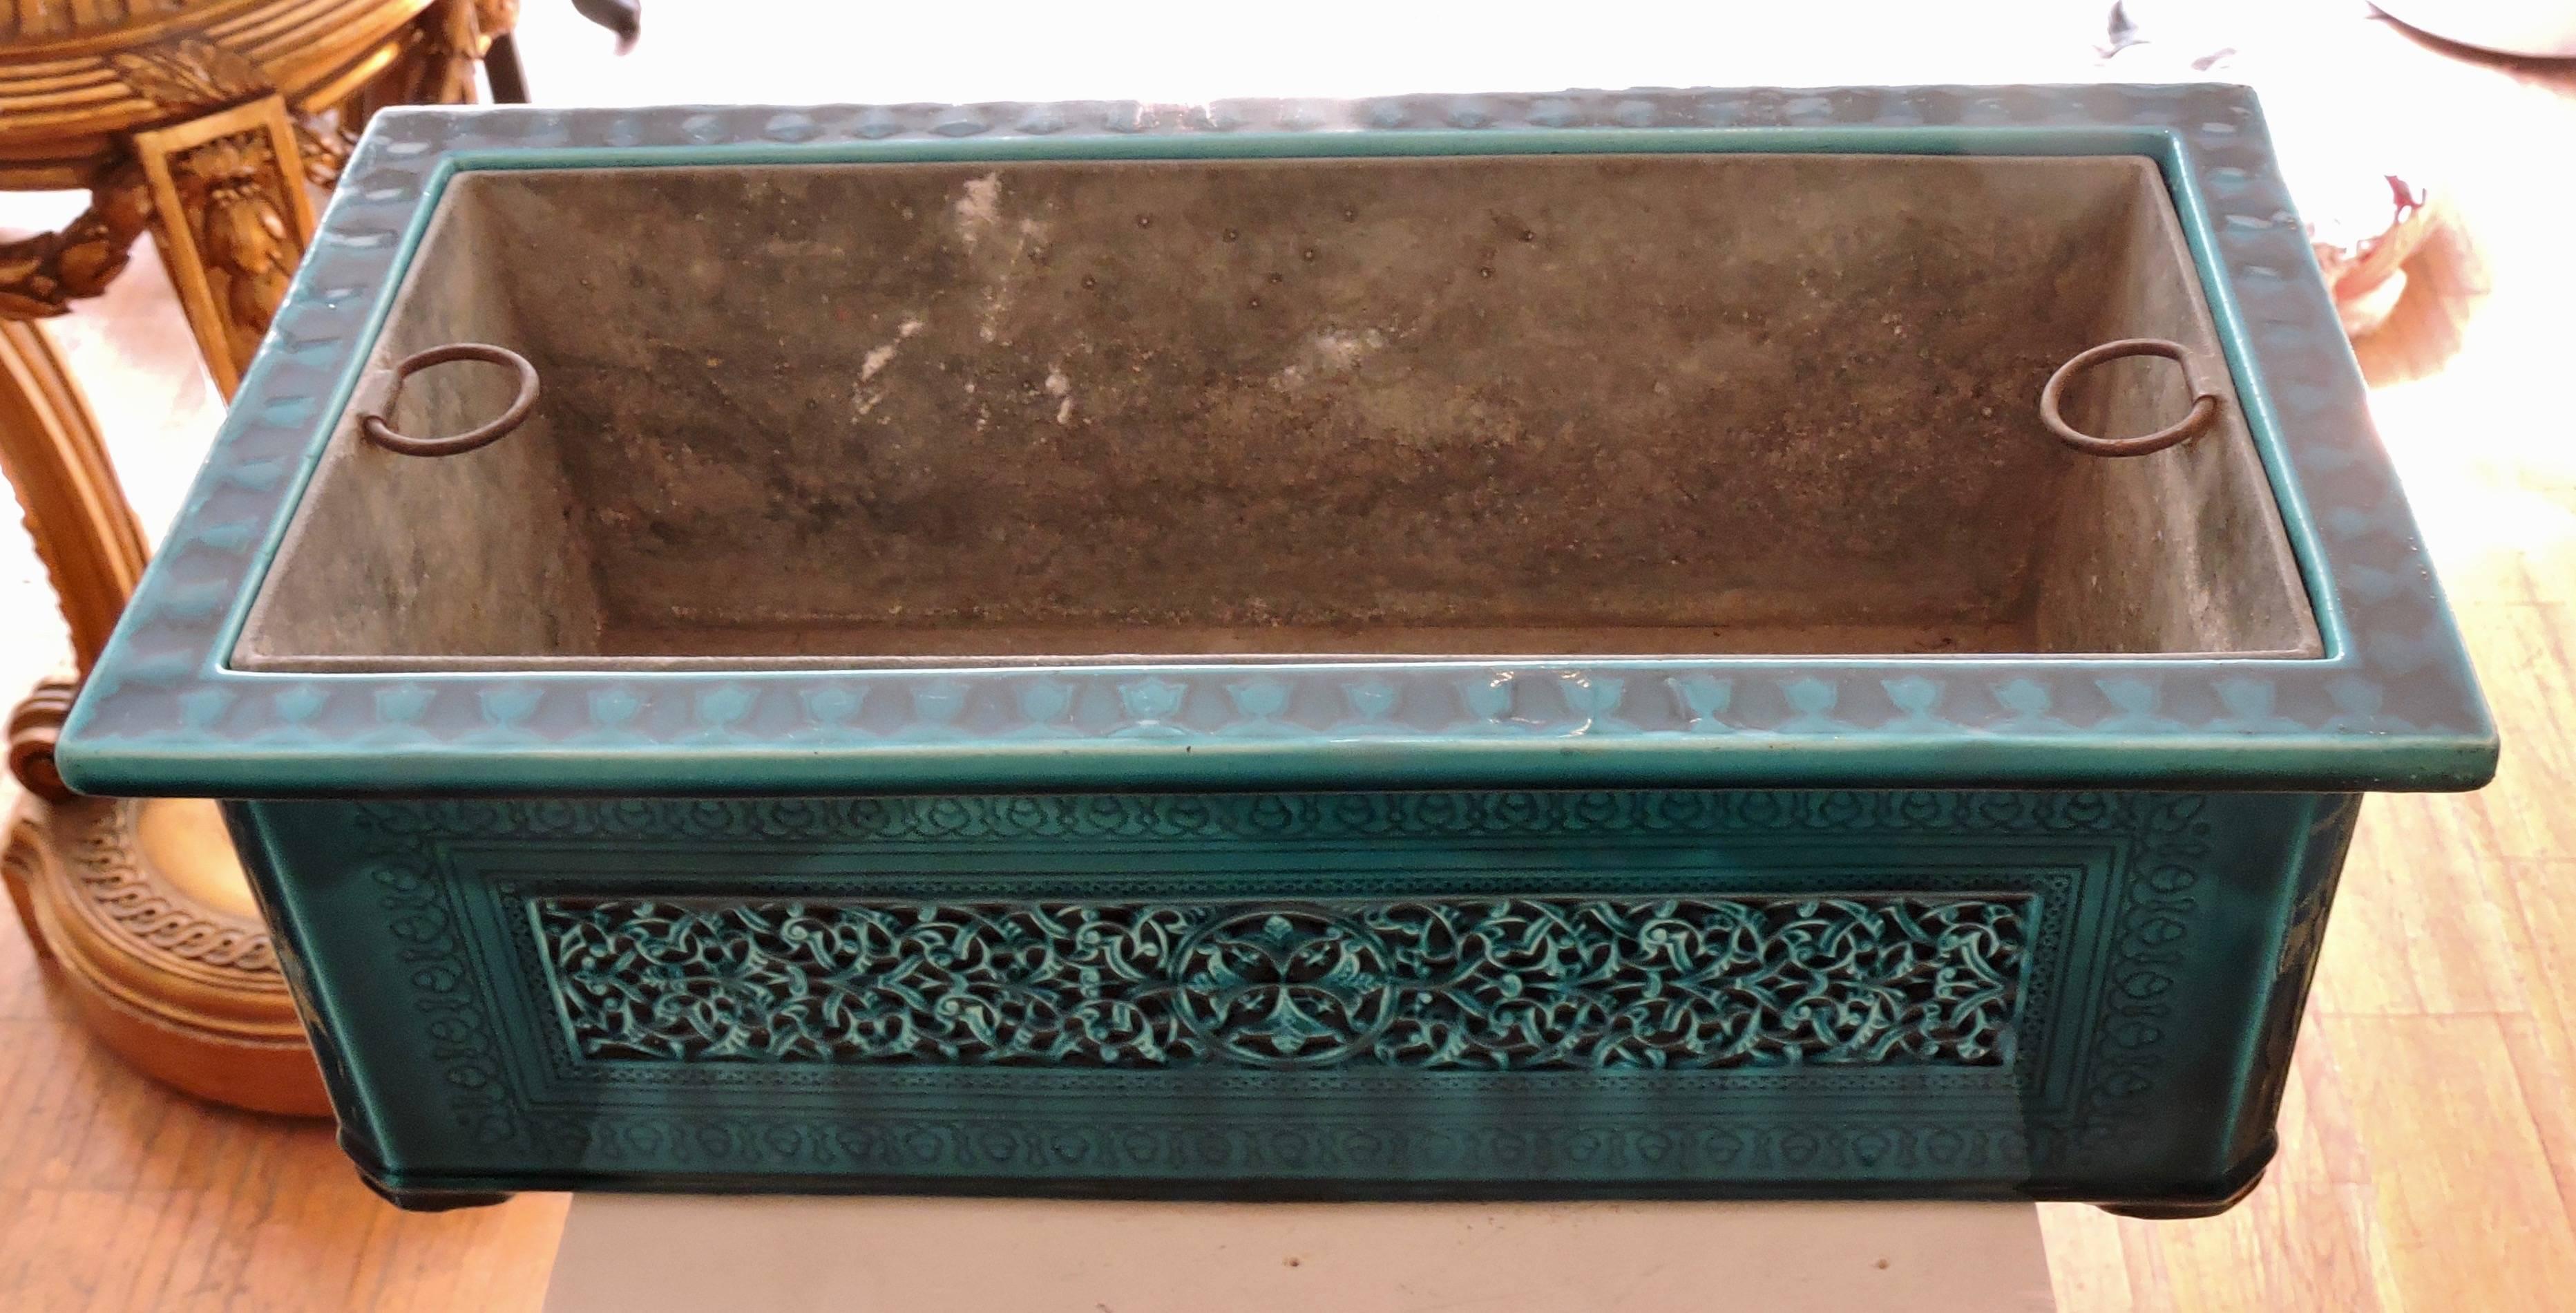 Enameled Théodore Deck Blue-Persian Faience Islamic Design Jardinière 19th Century